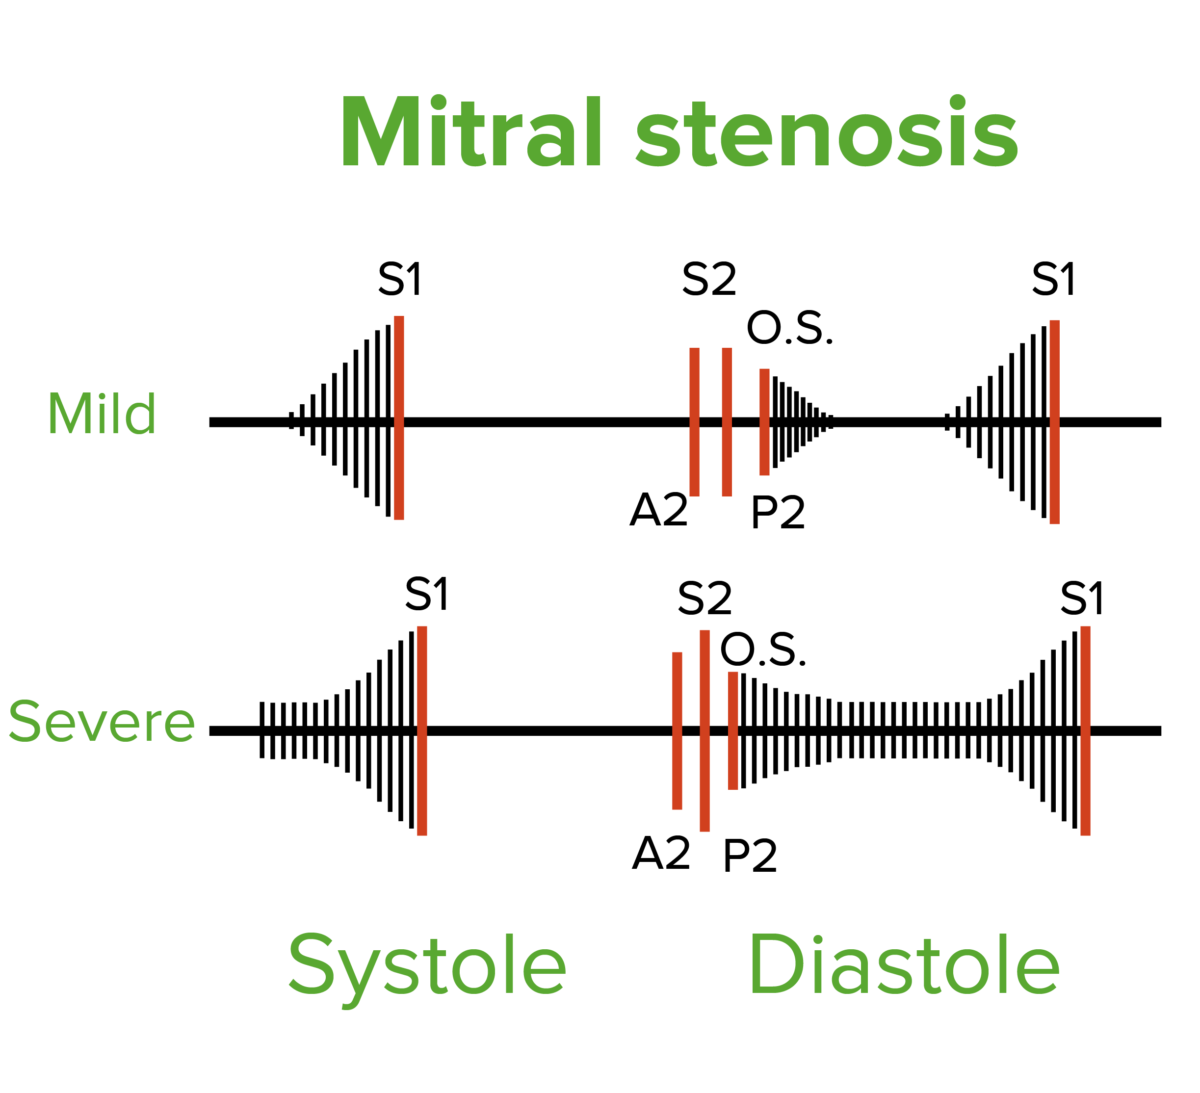 Diastolic filling and rumbling murmur of mild and severe mitral stenosis